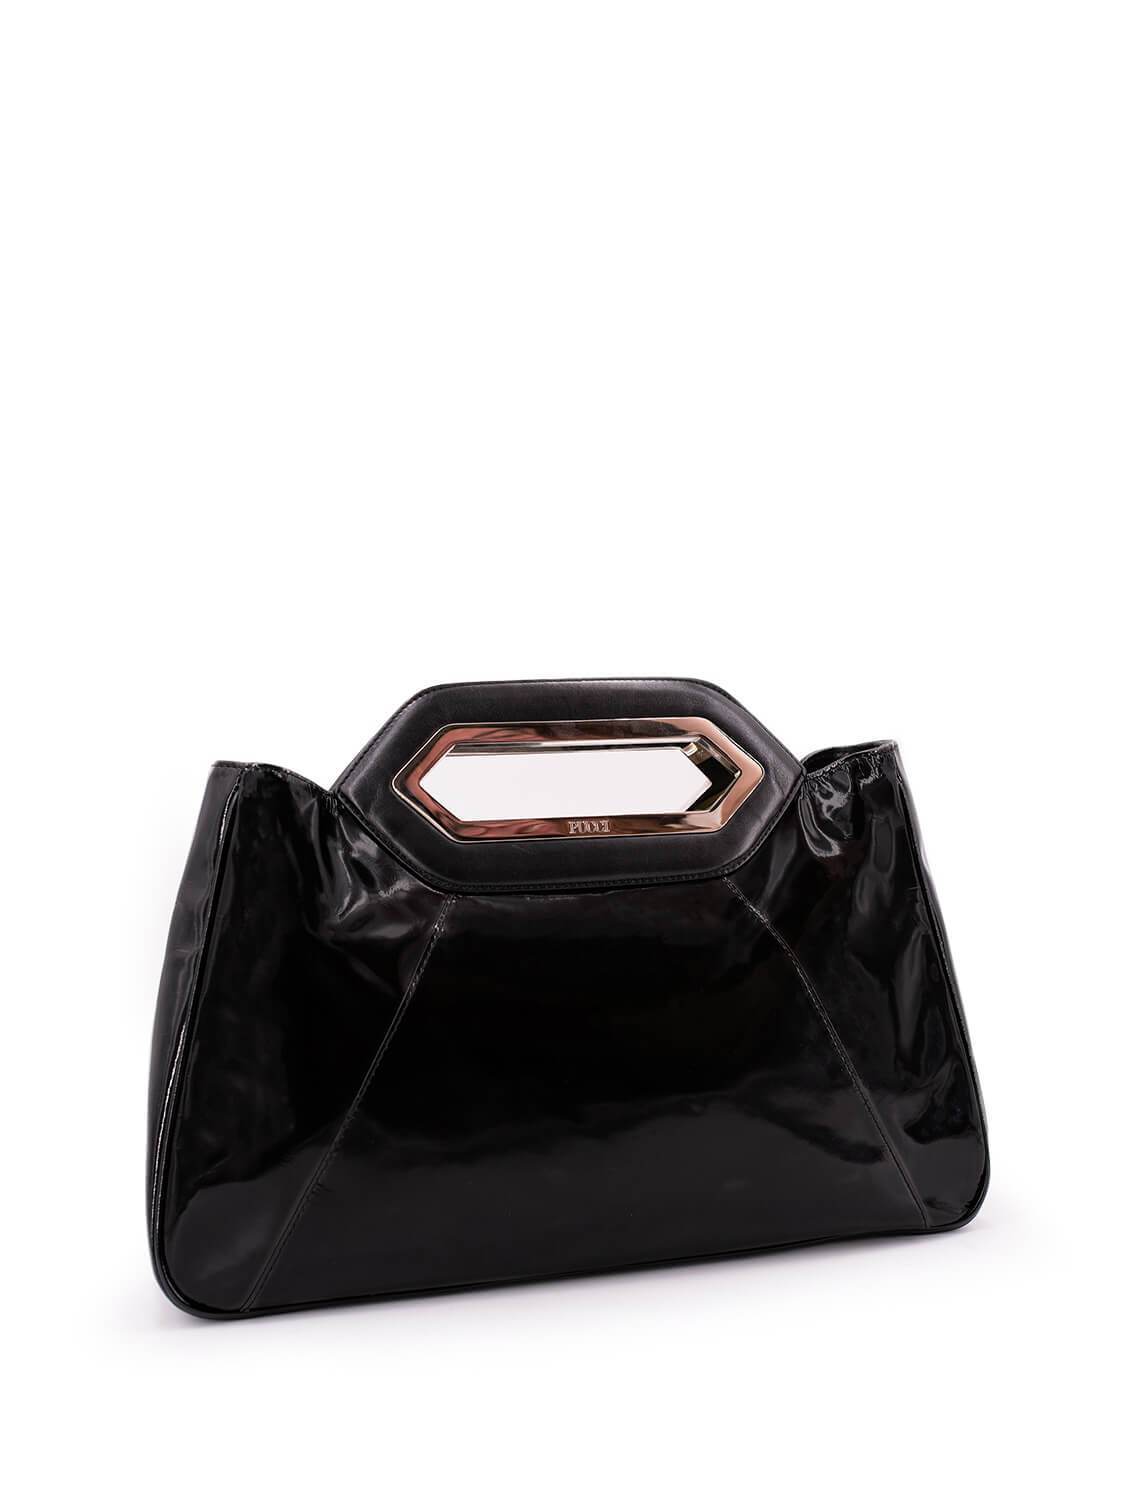 Emilio Pucci Patent Leather Large Clutch Black-designer resale